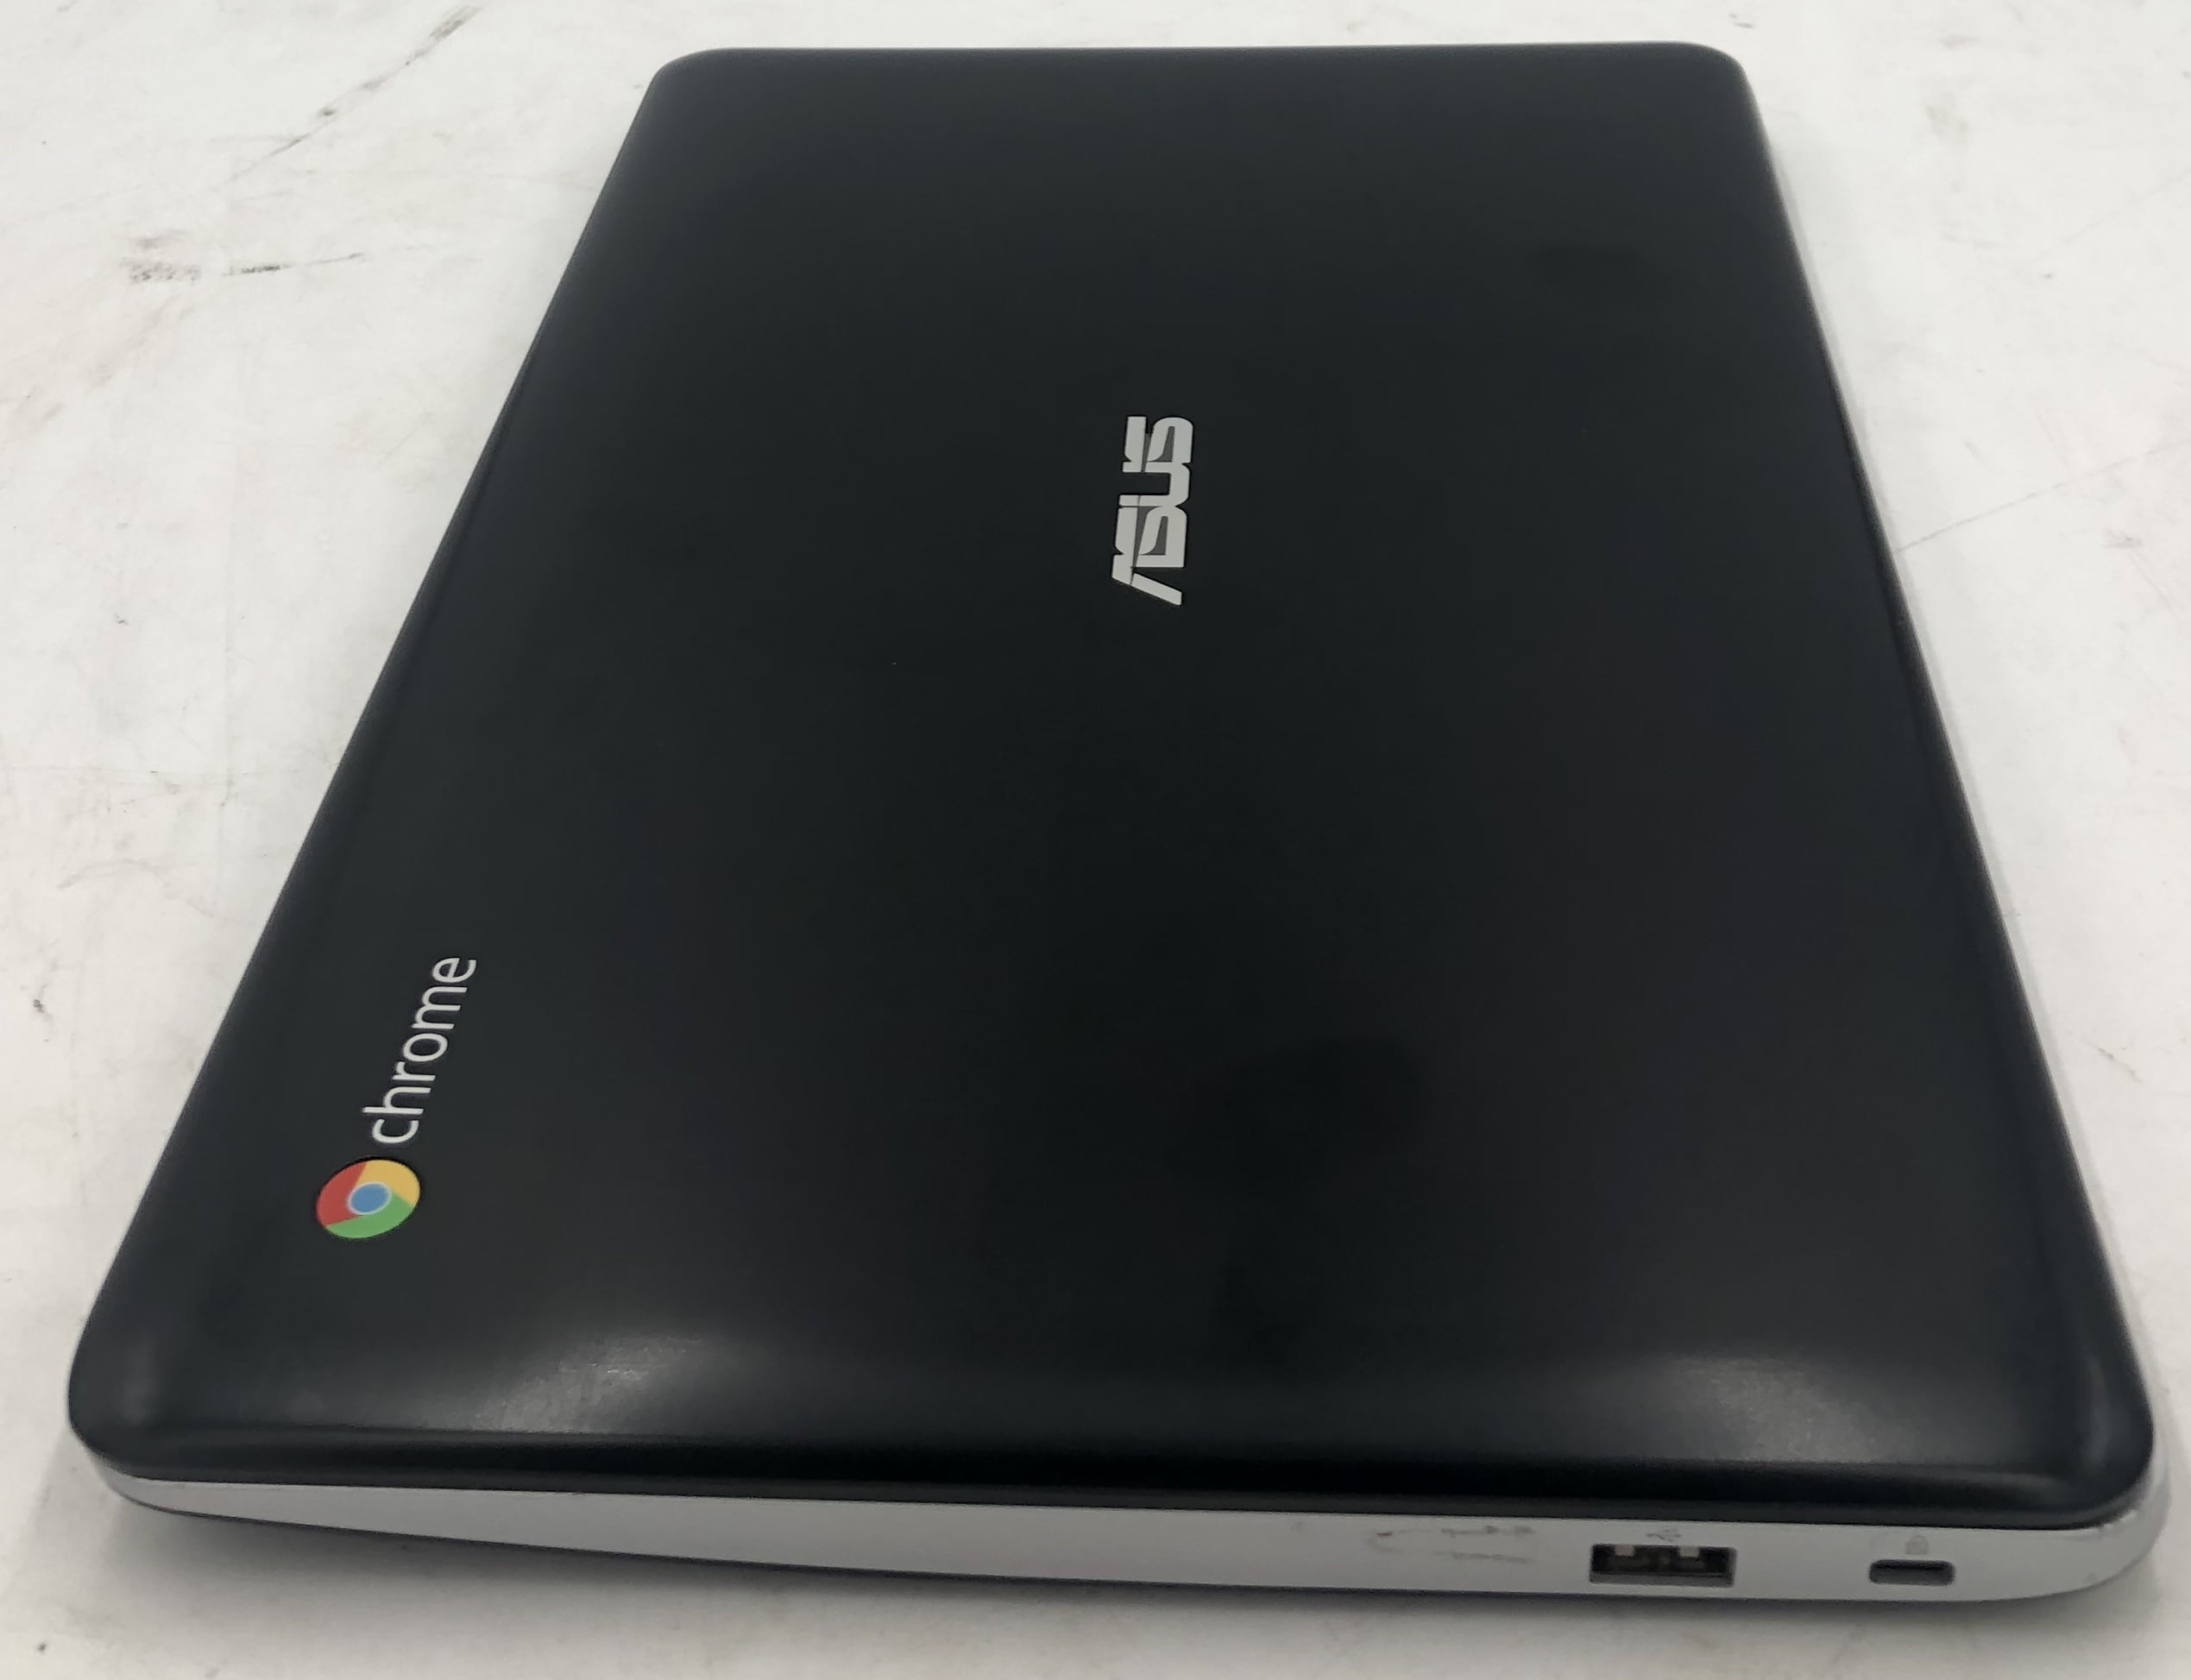 Asus C200M Chromebook- 16GB eMMC, 2GB RAM, Intel Celeron N2830 CPU